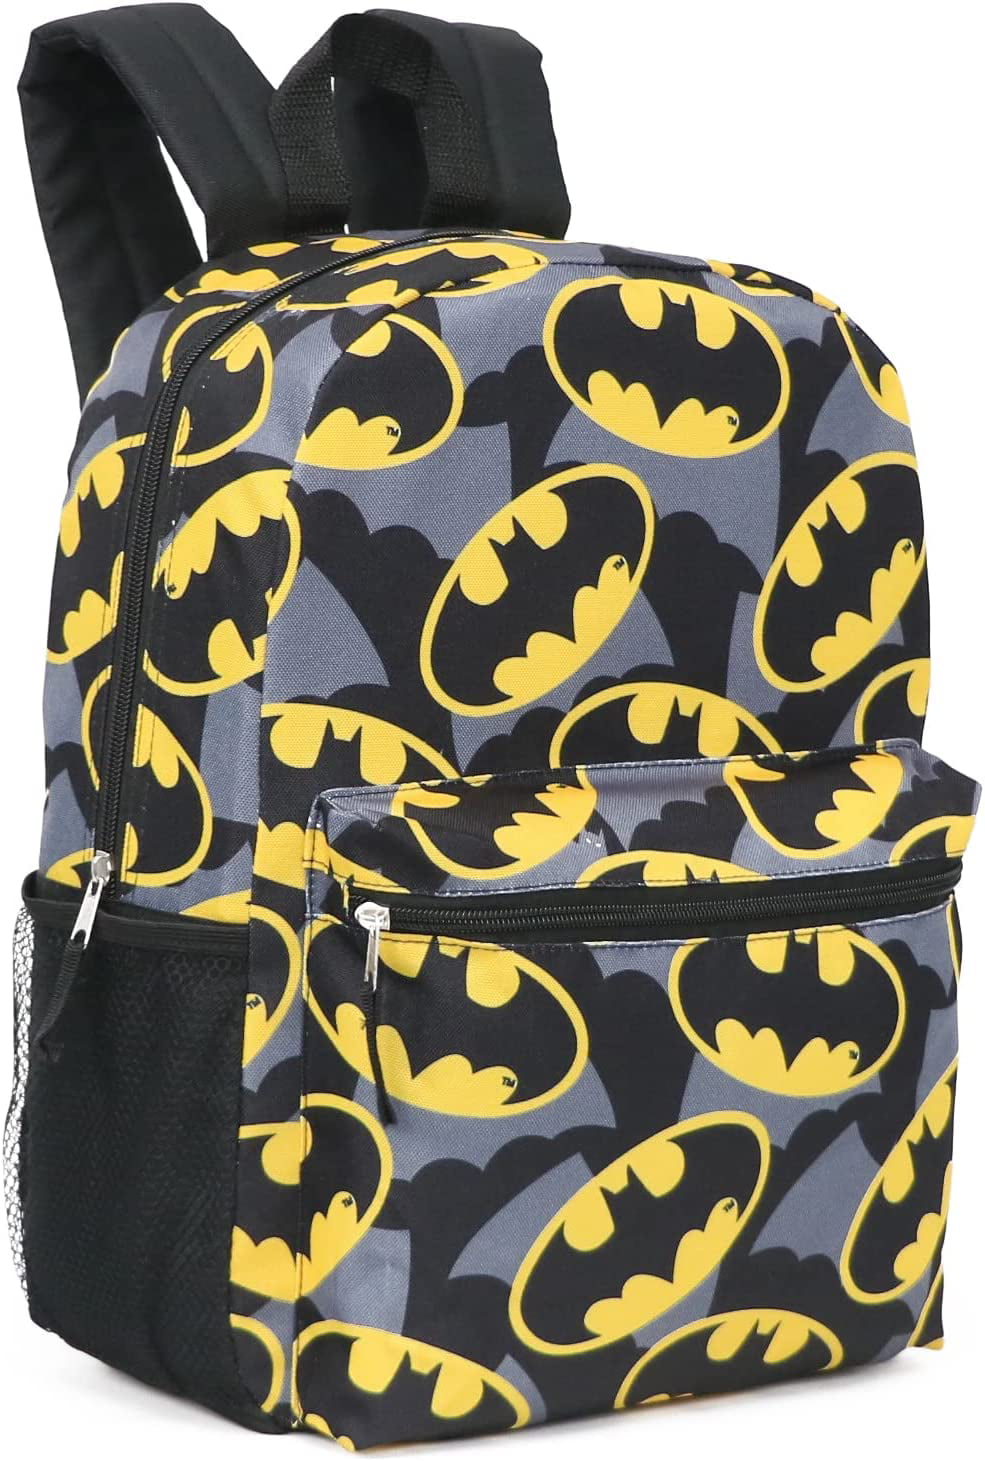 Buy Batman Logo Printed Lunch Bag Online for Kids | Centrepoint Kuwait